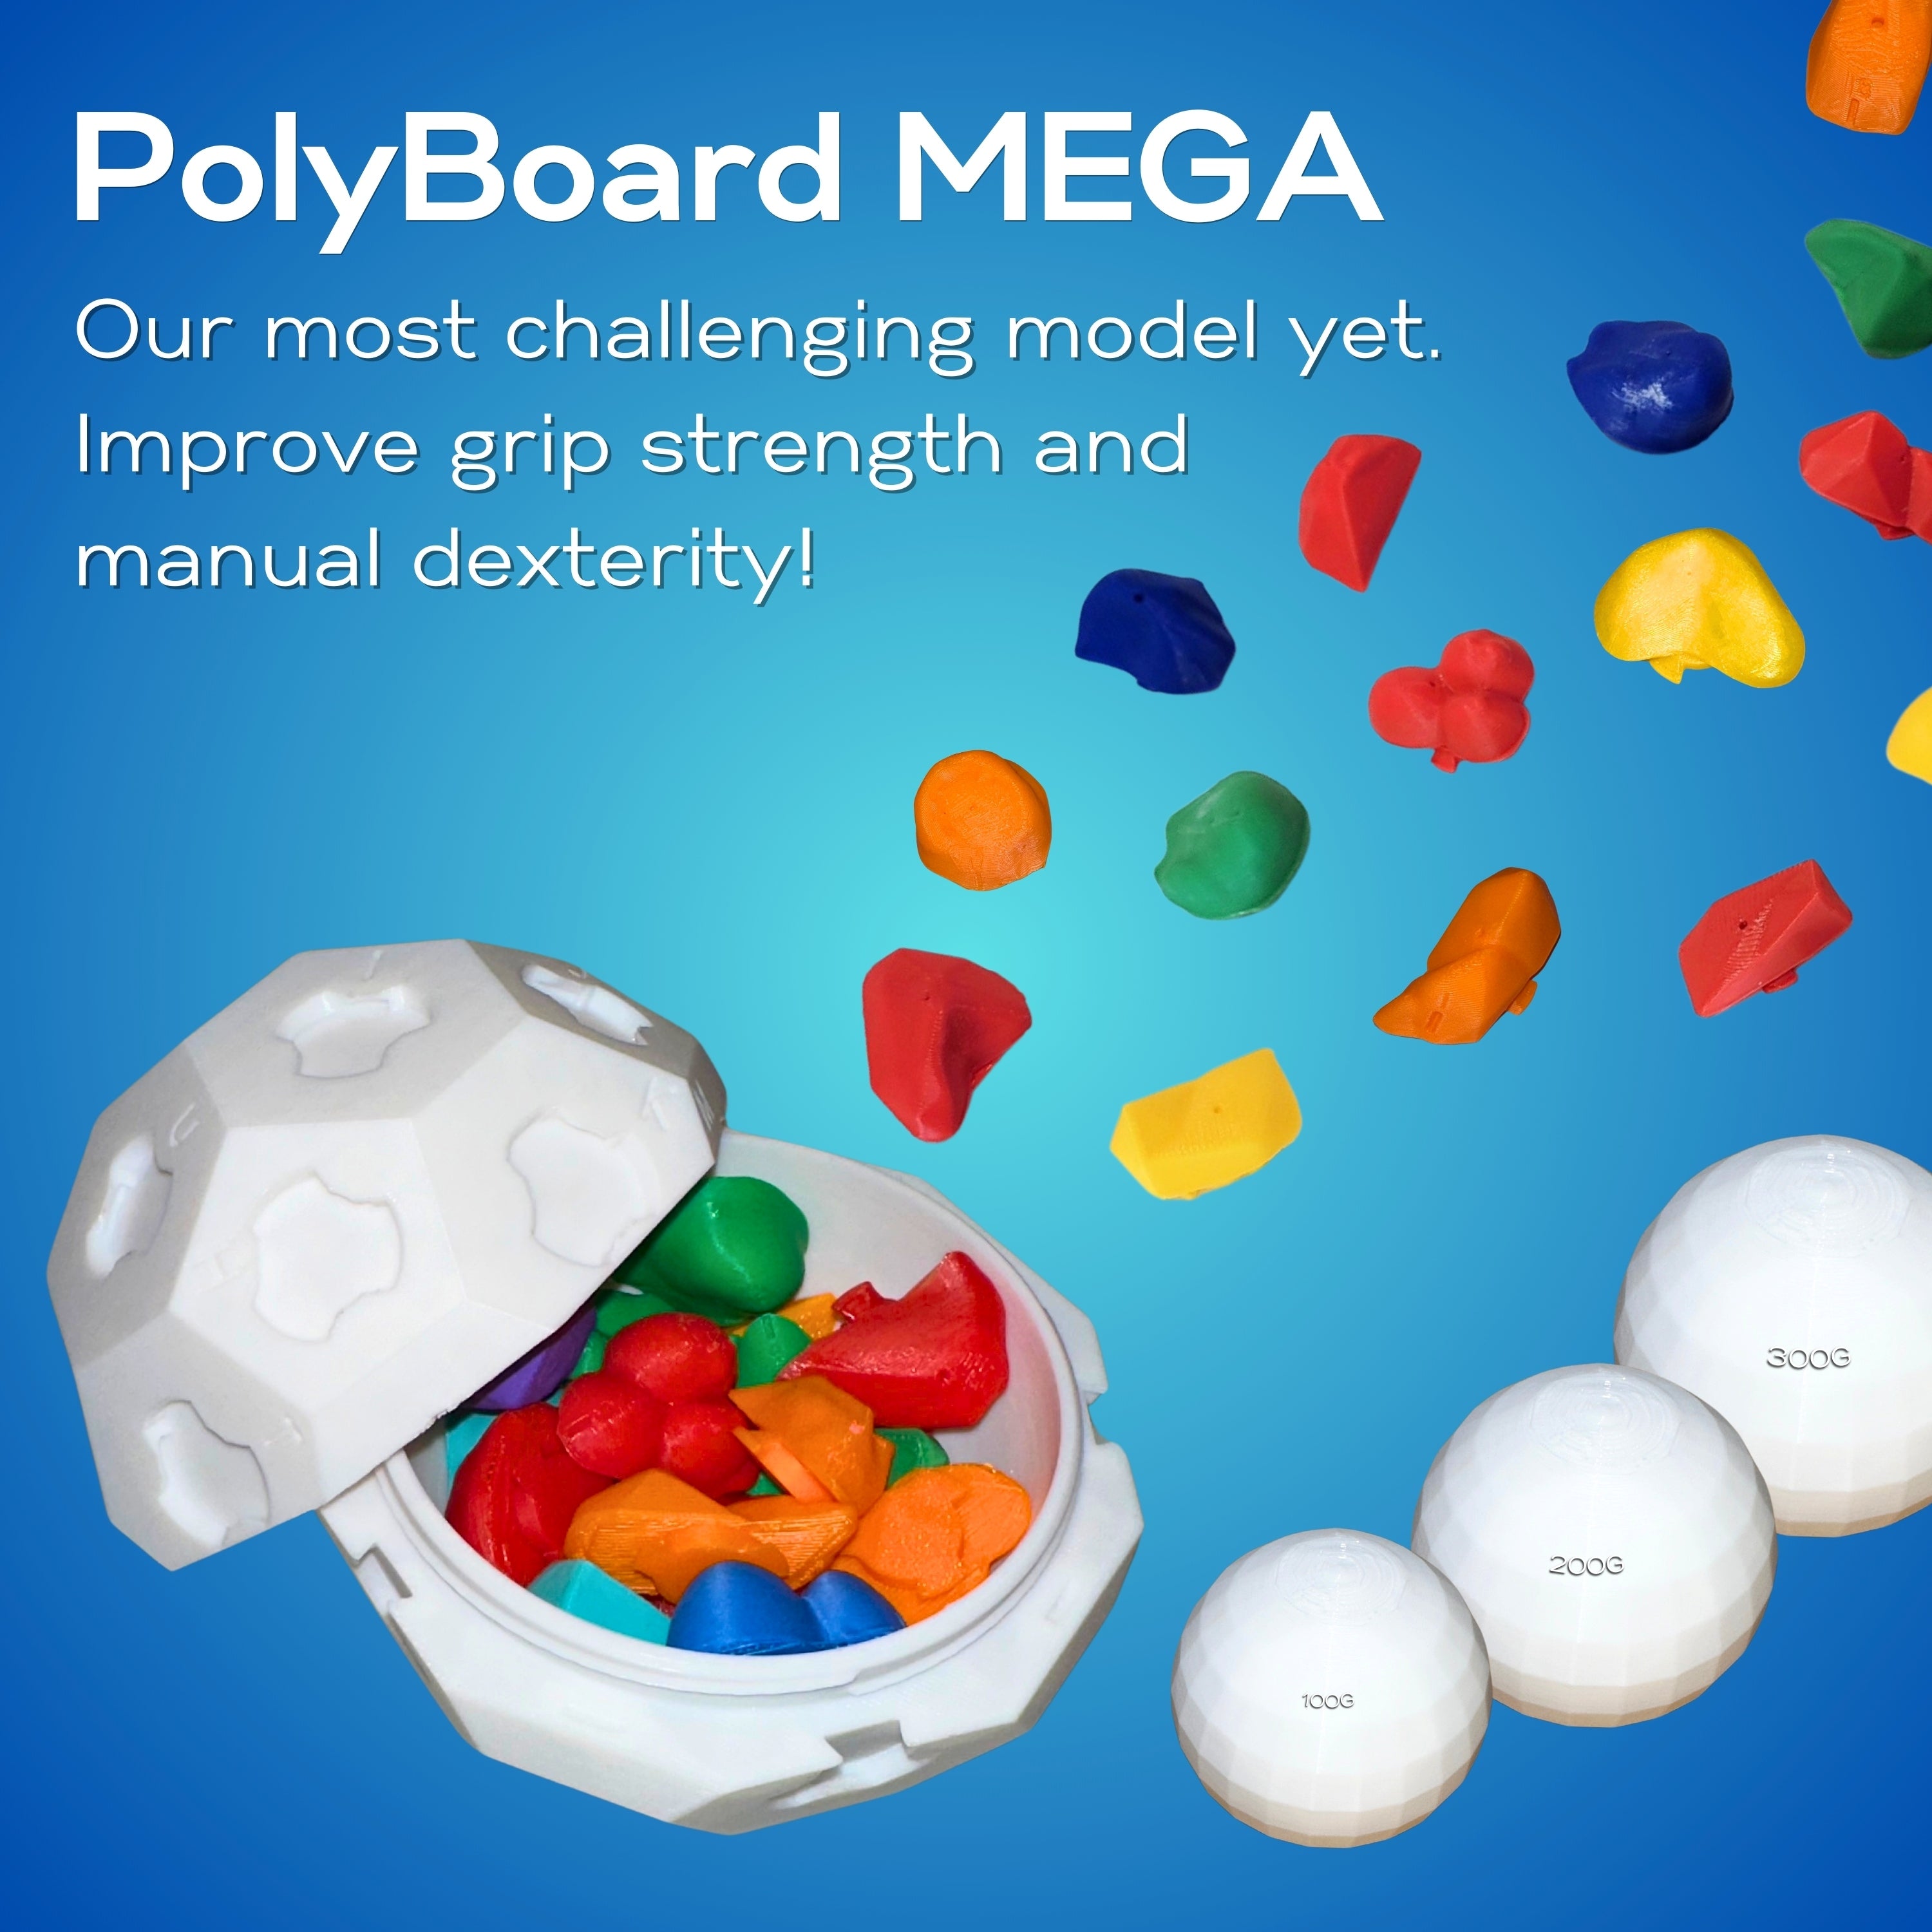 PolyBoard MEGA